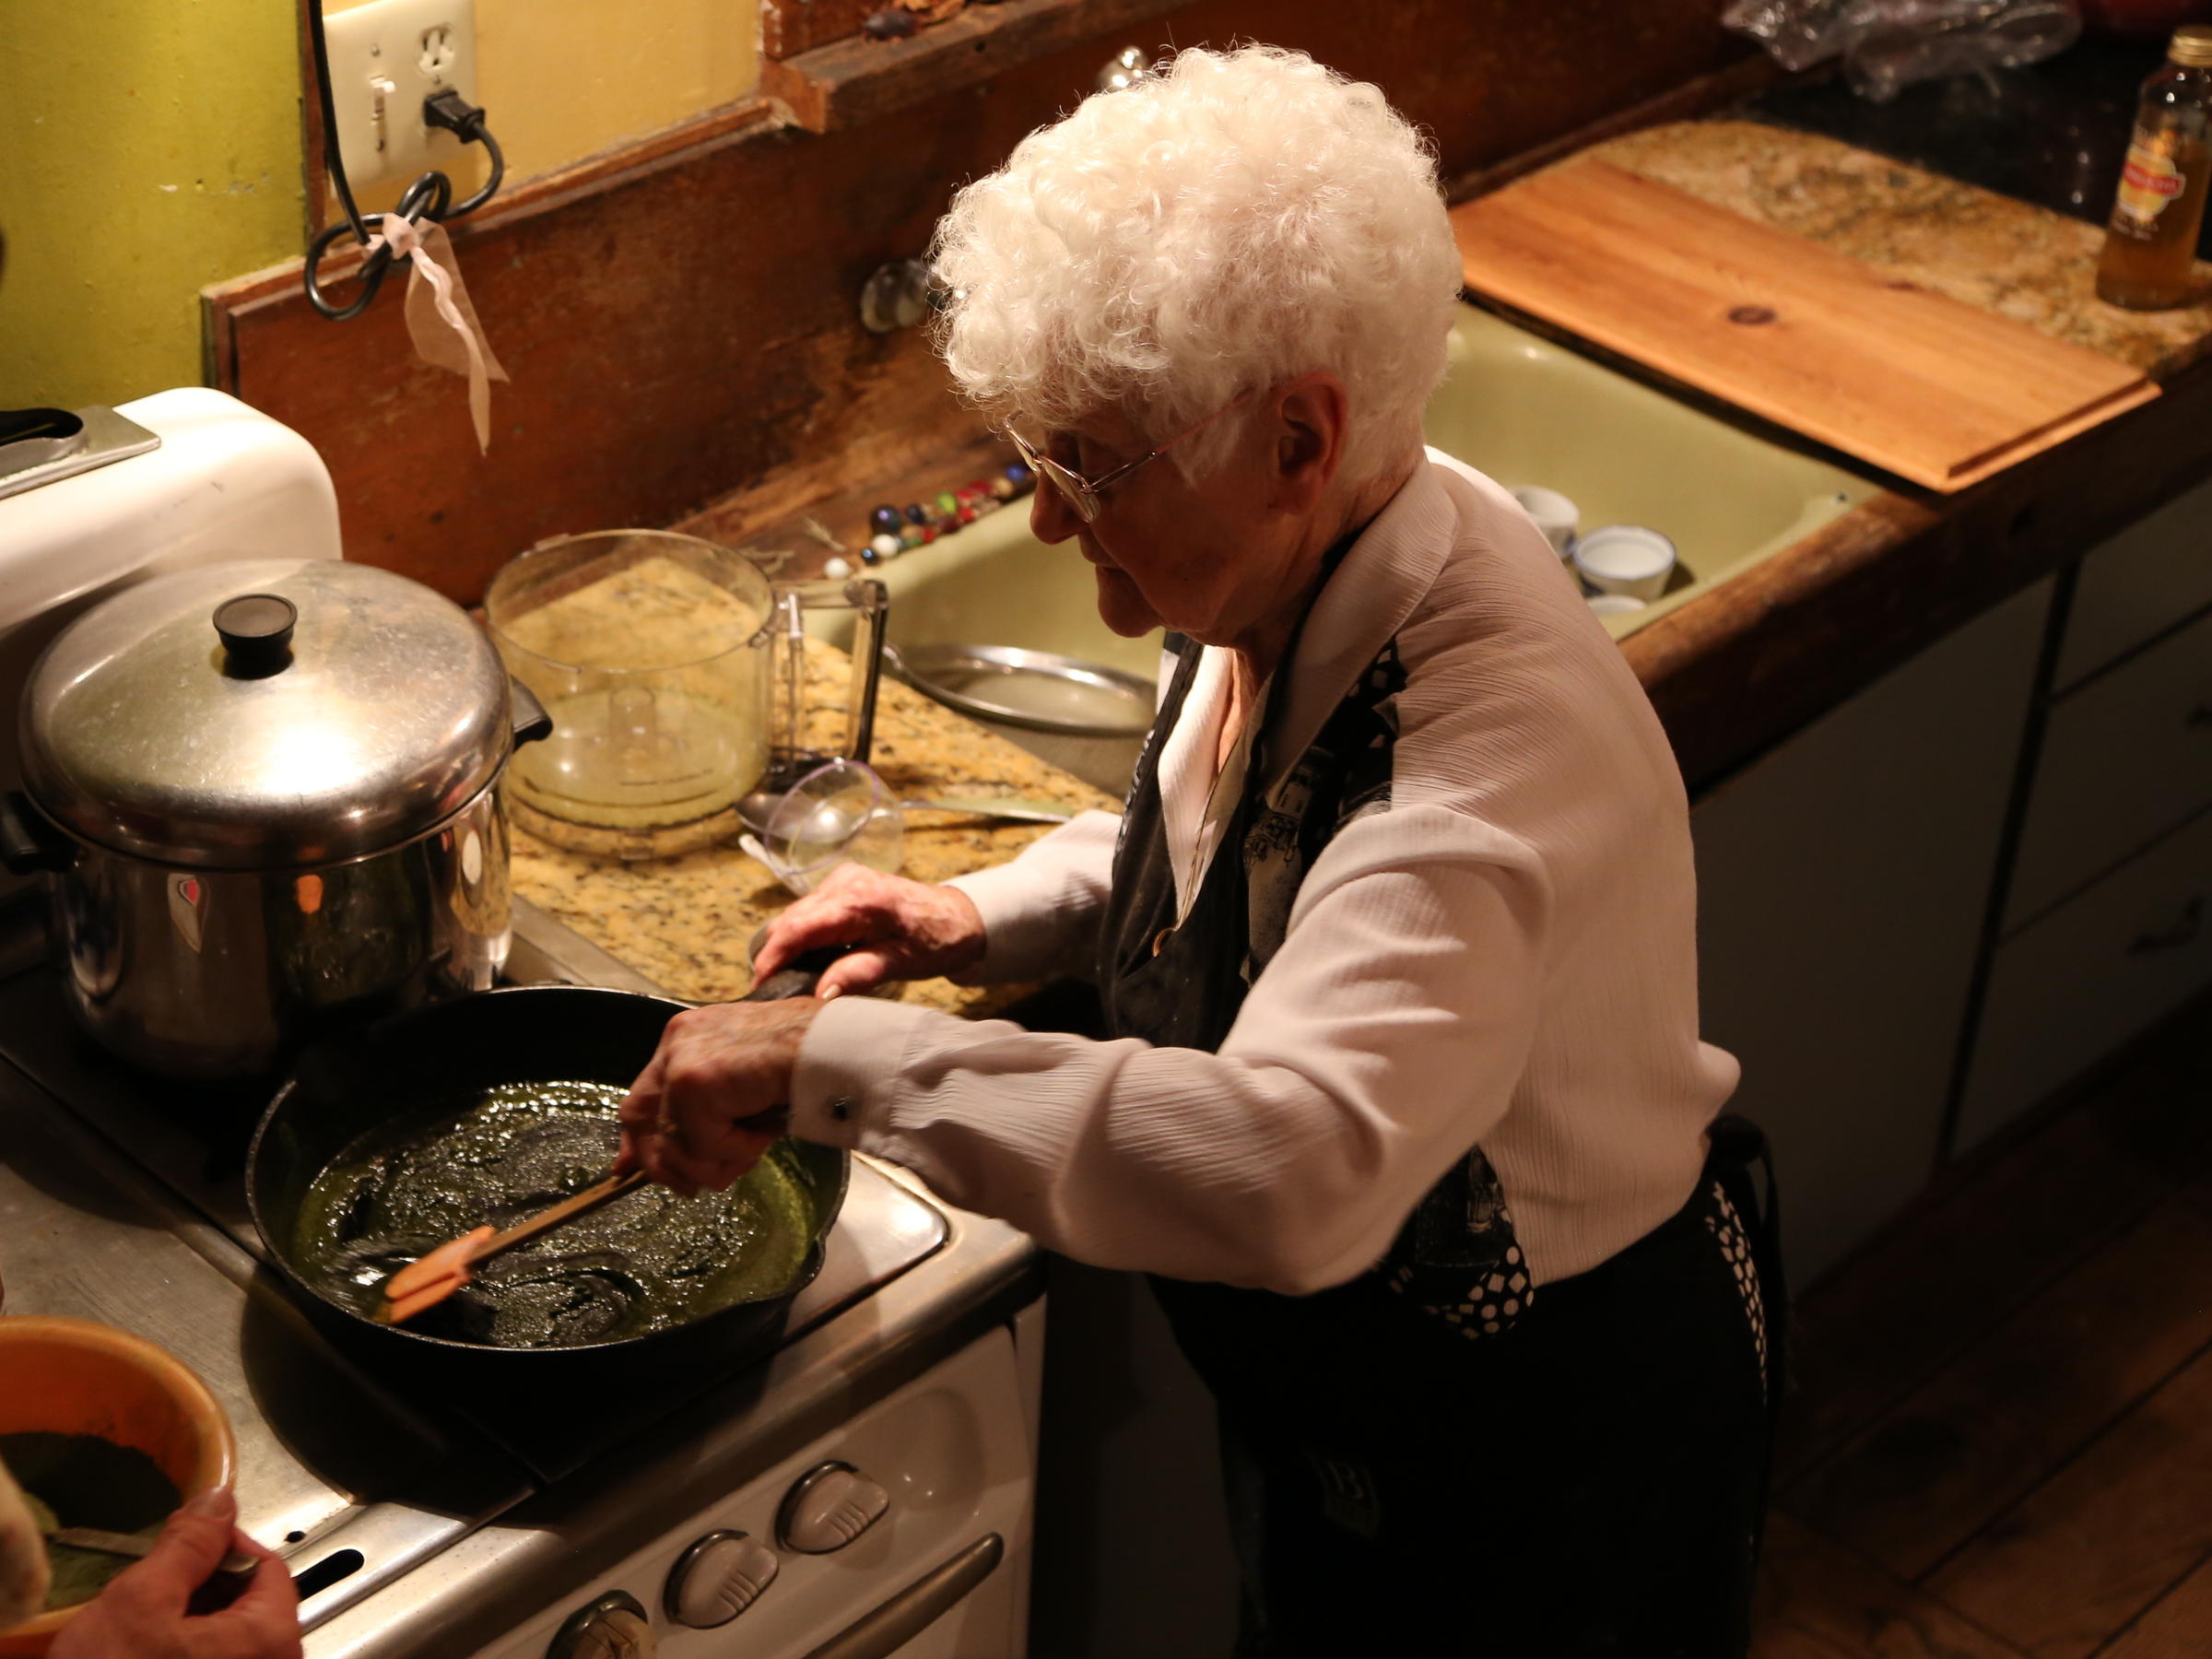 Conocéis alguna abuela que no sepa cocinar?? - Foro Coches